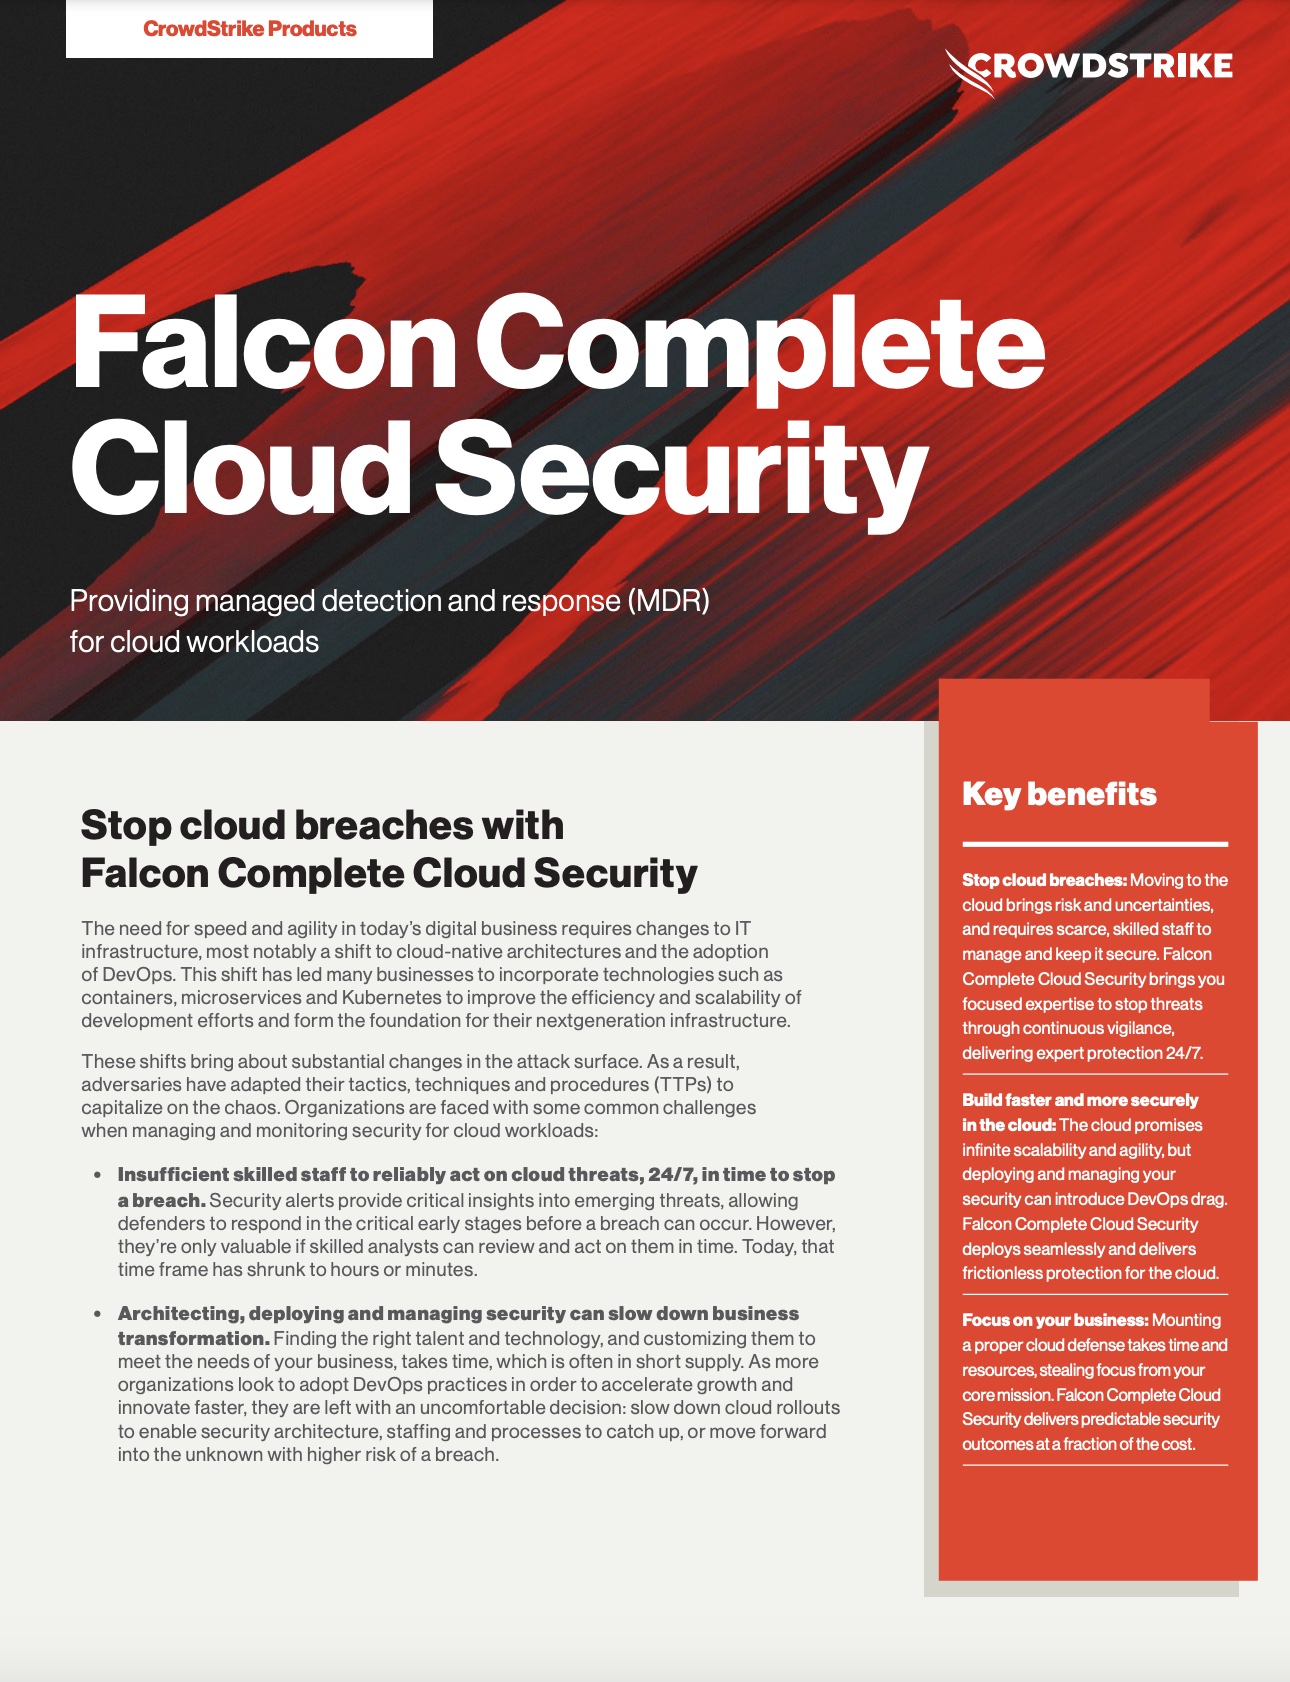 Falcon Complete Cloud Security Data Sheet CrowdStrike